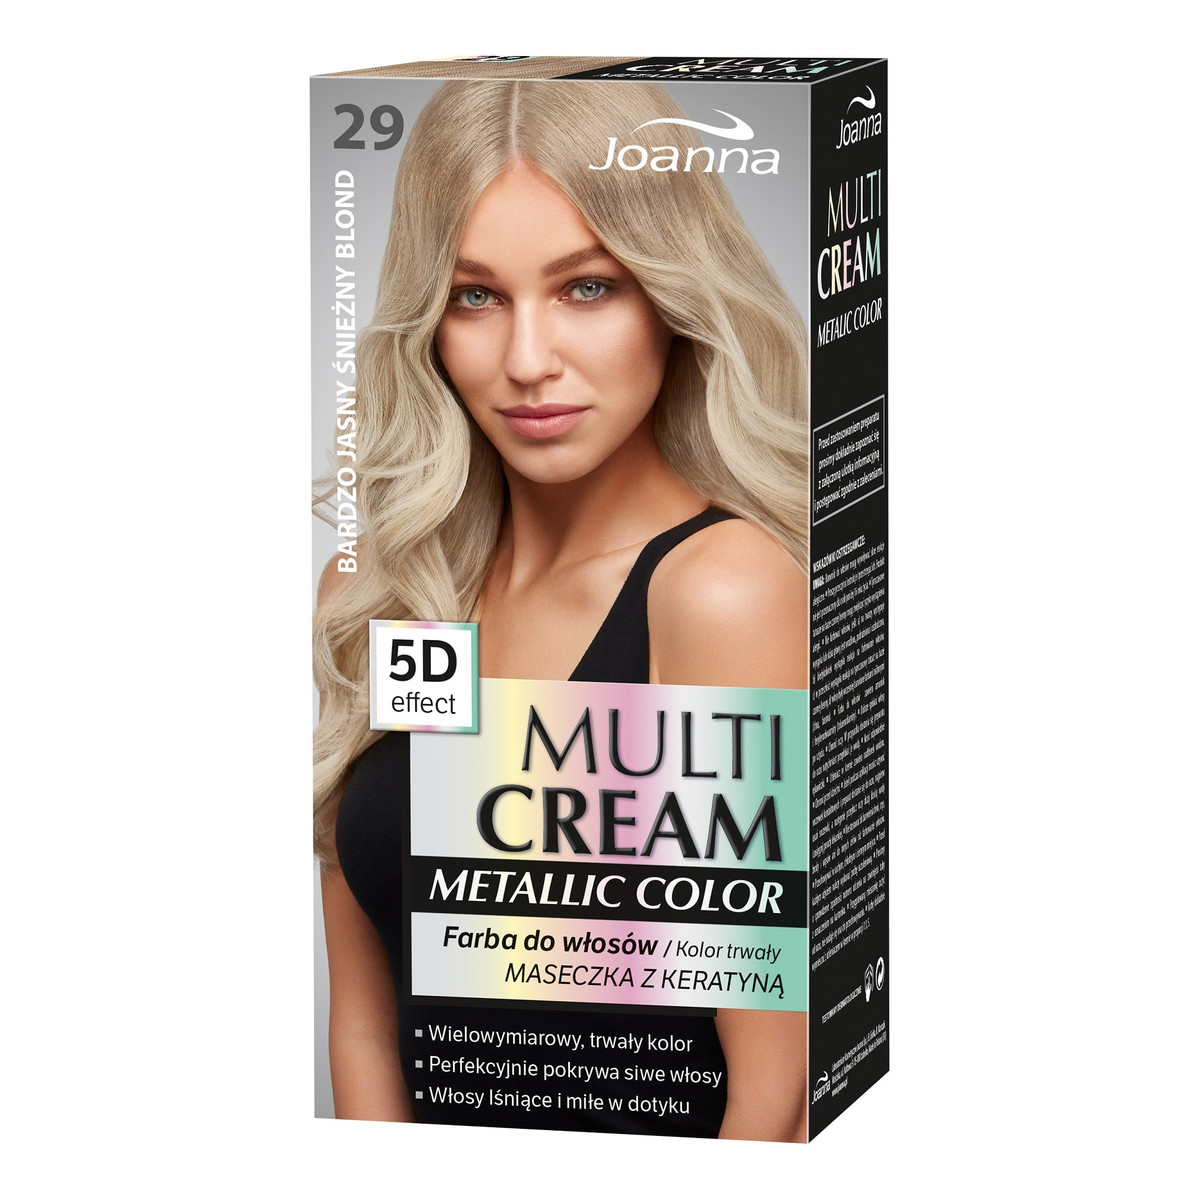 Joanna Multi Cream Metallic Color Farba do włosów